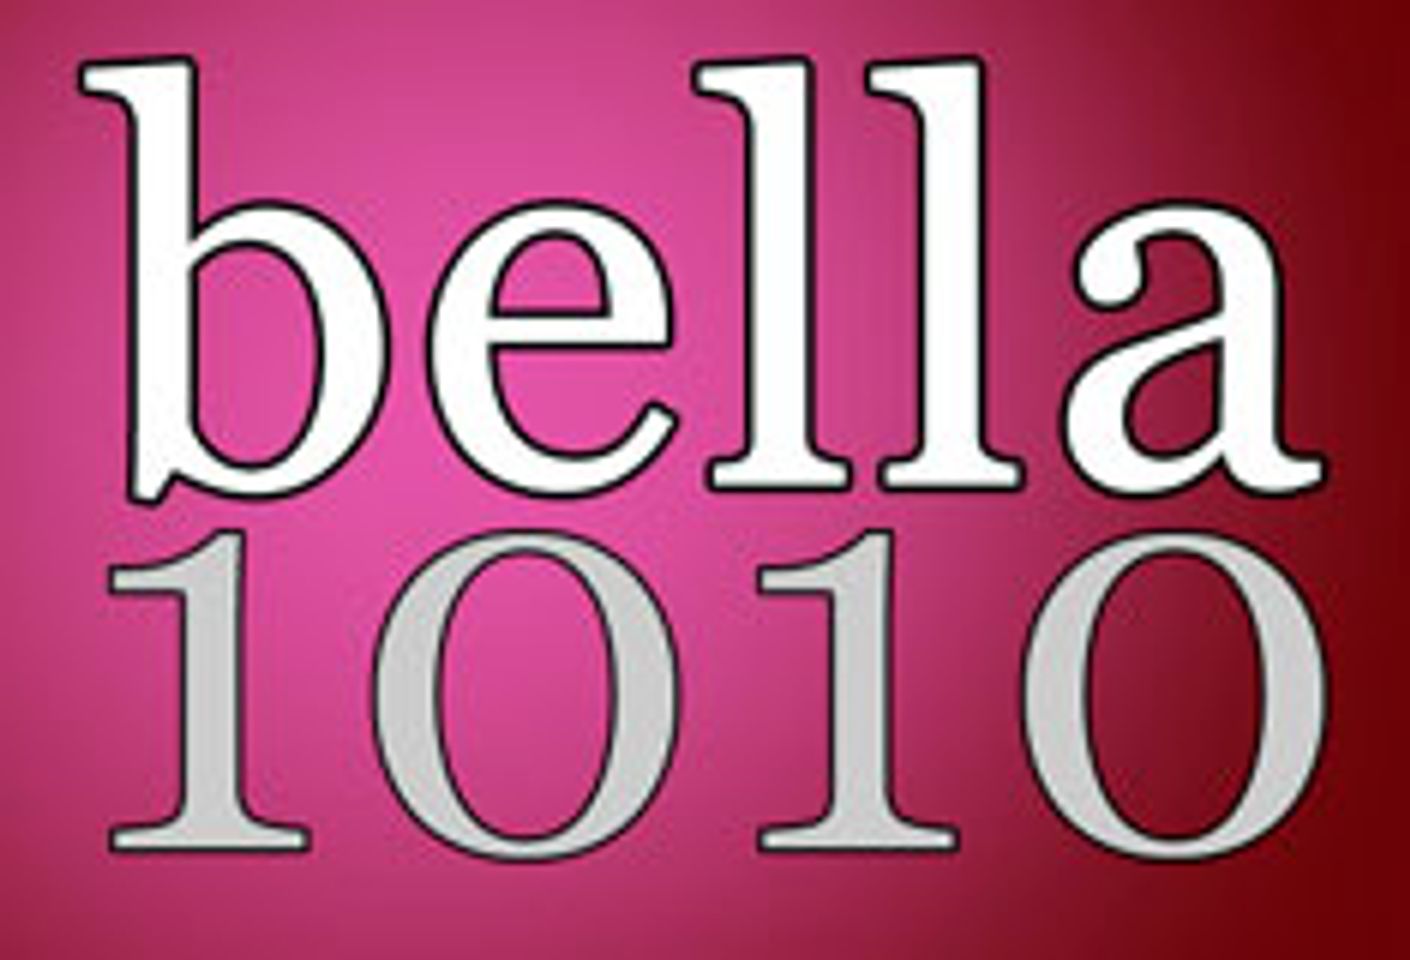 Bella1010Cash Glamour Site Debuts CCBTools-Powered Program